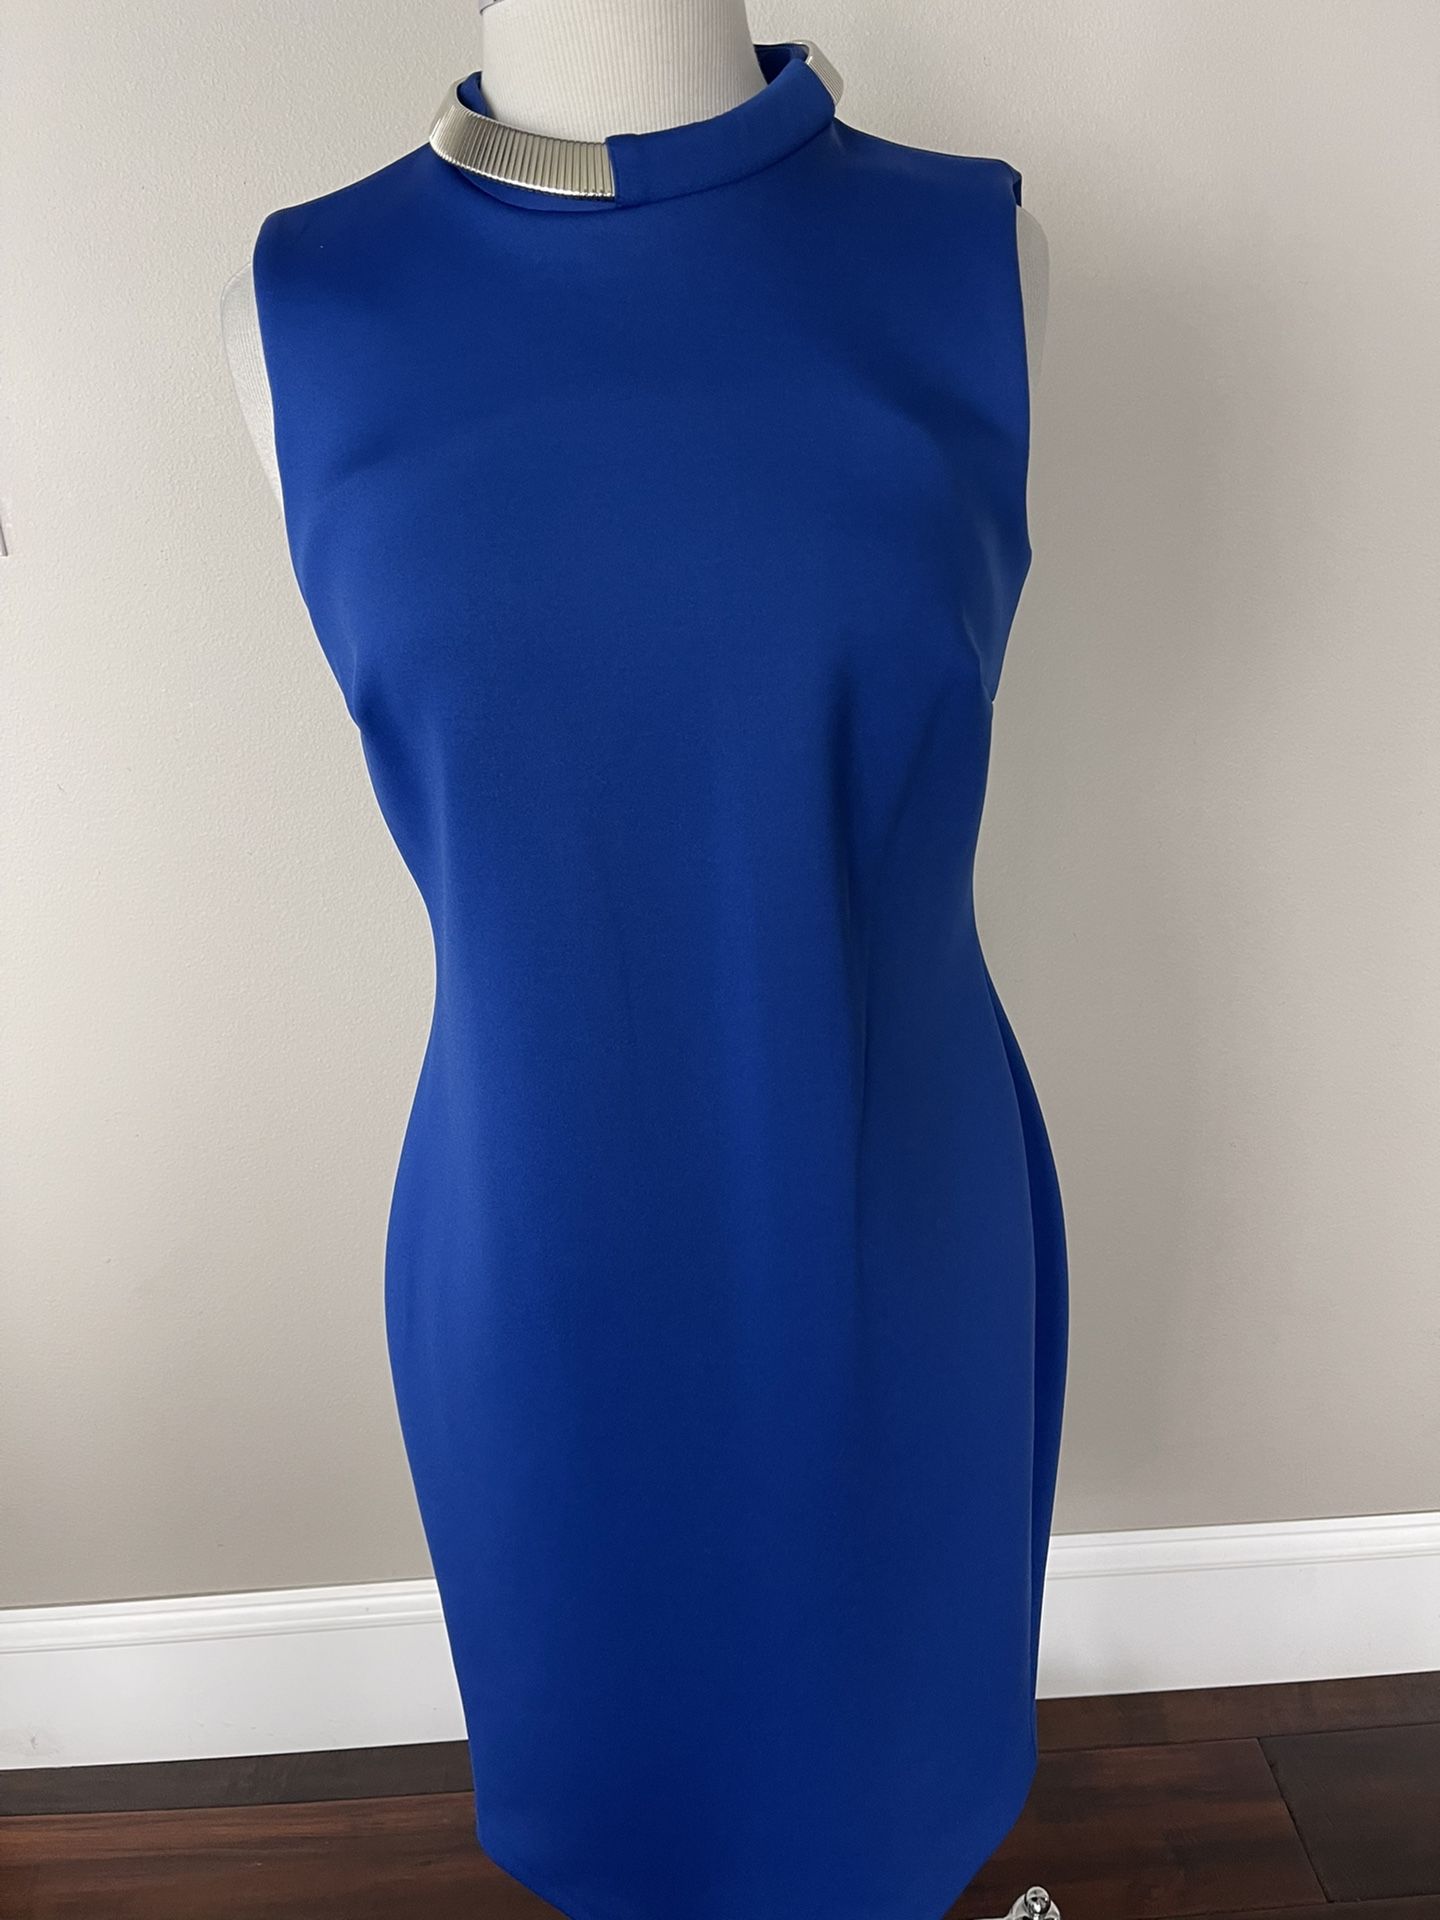 Stunning Calvin Klein Royal Blue Dress With Silver Accent Around Neck